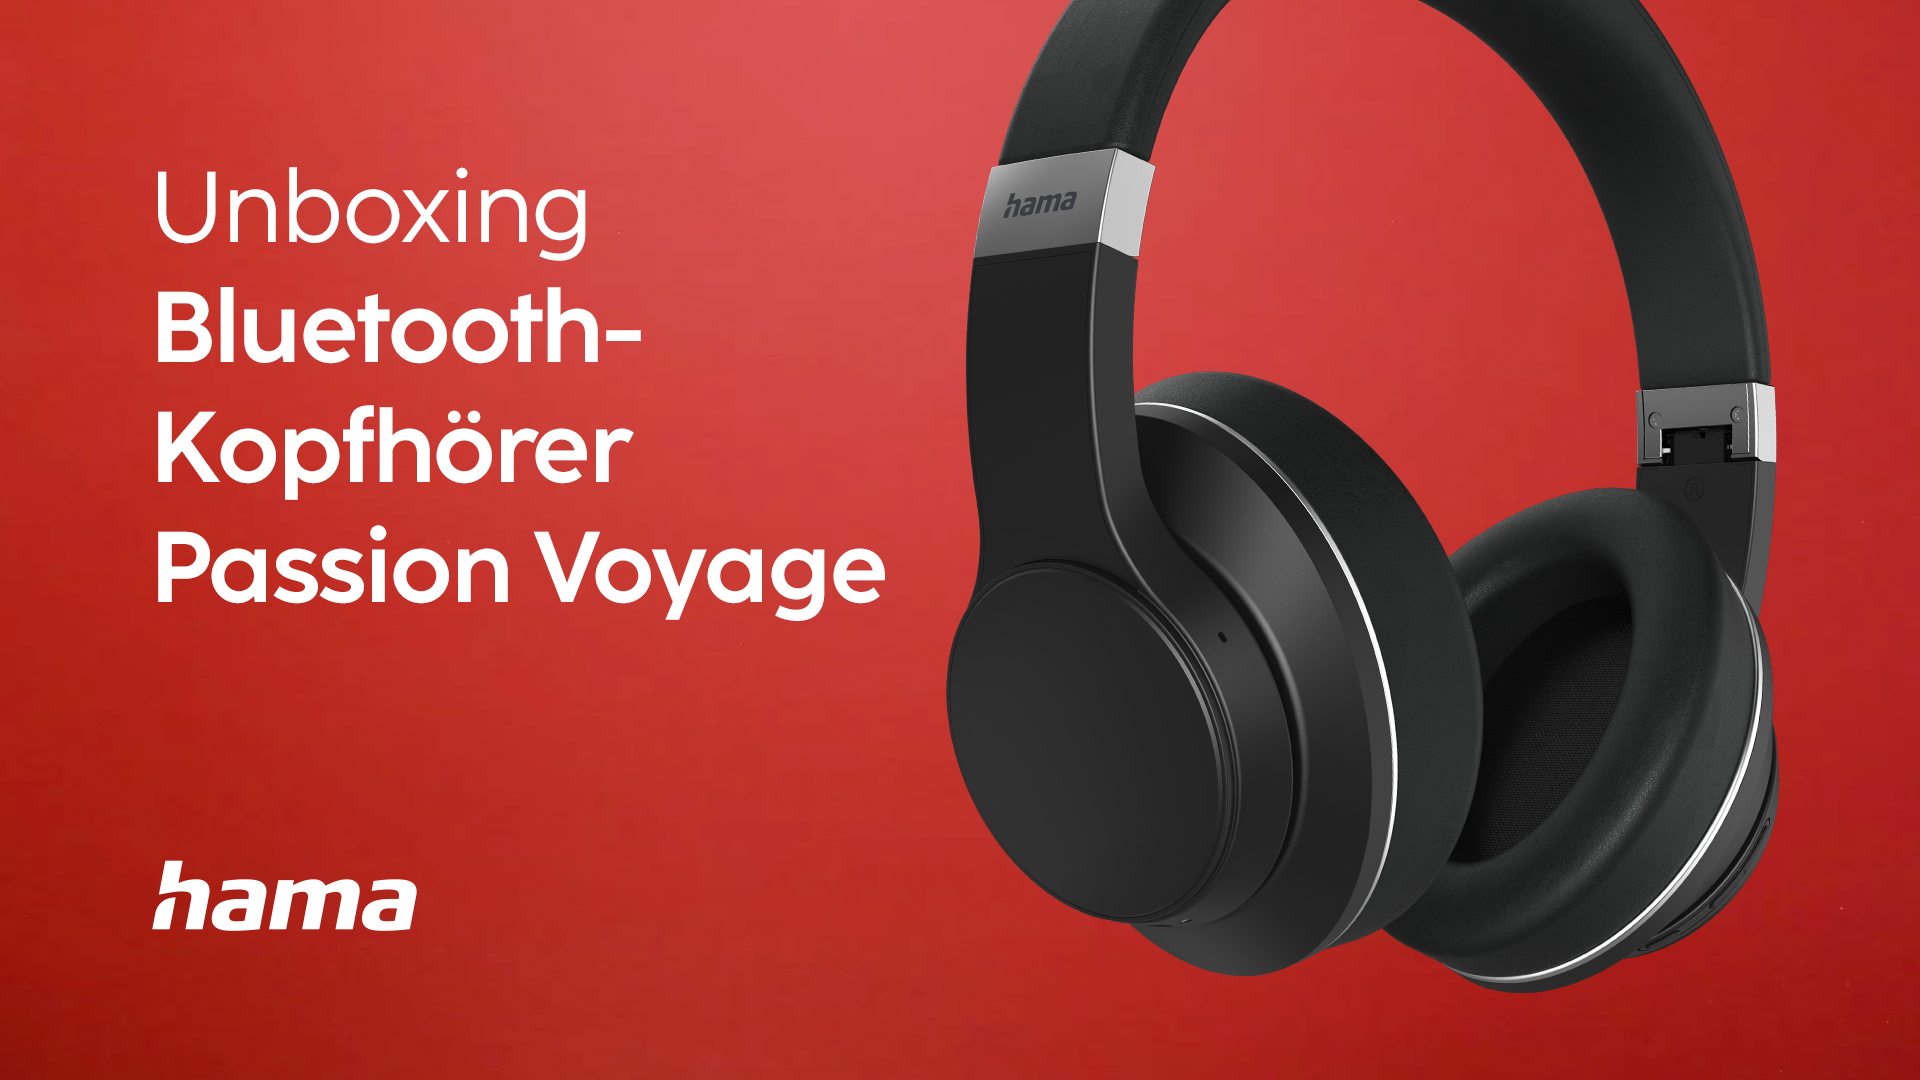 Hama Bluetooth-Kopfhörer "Passion Voyage" | Unboxing